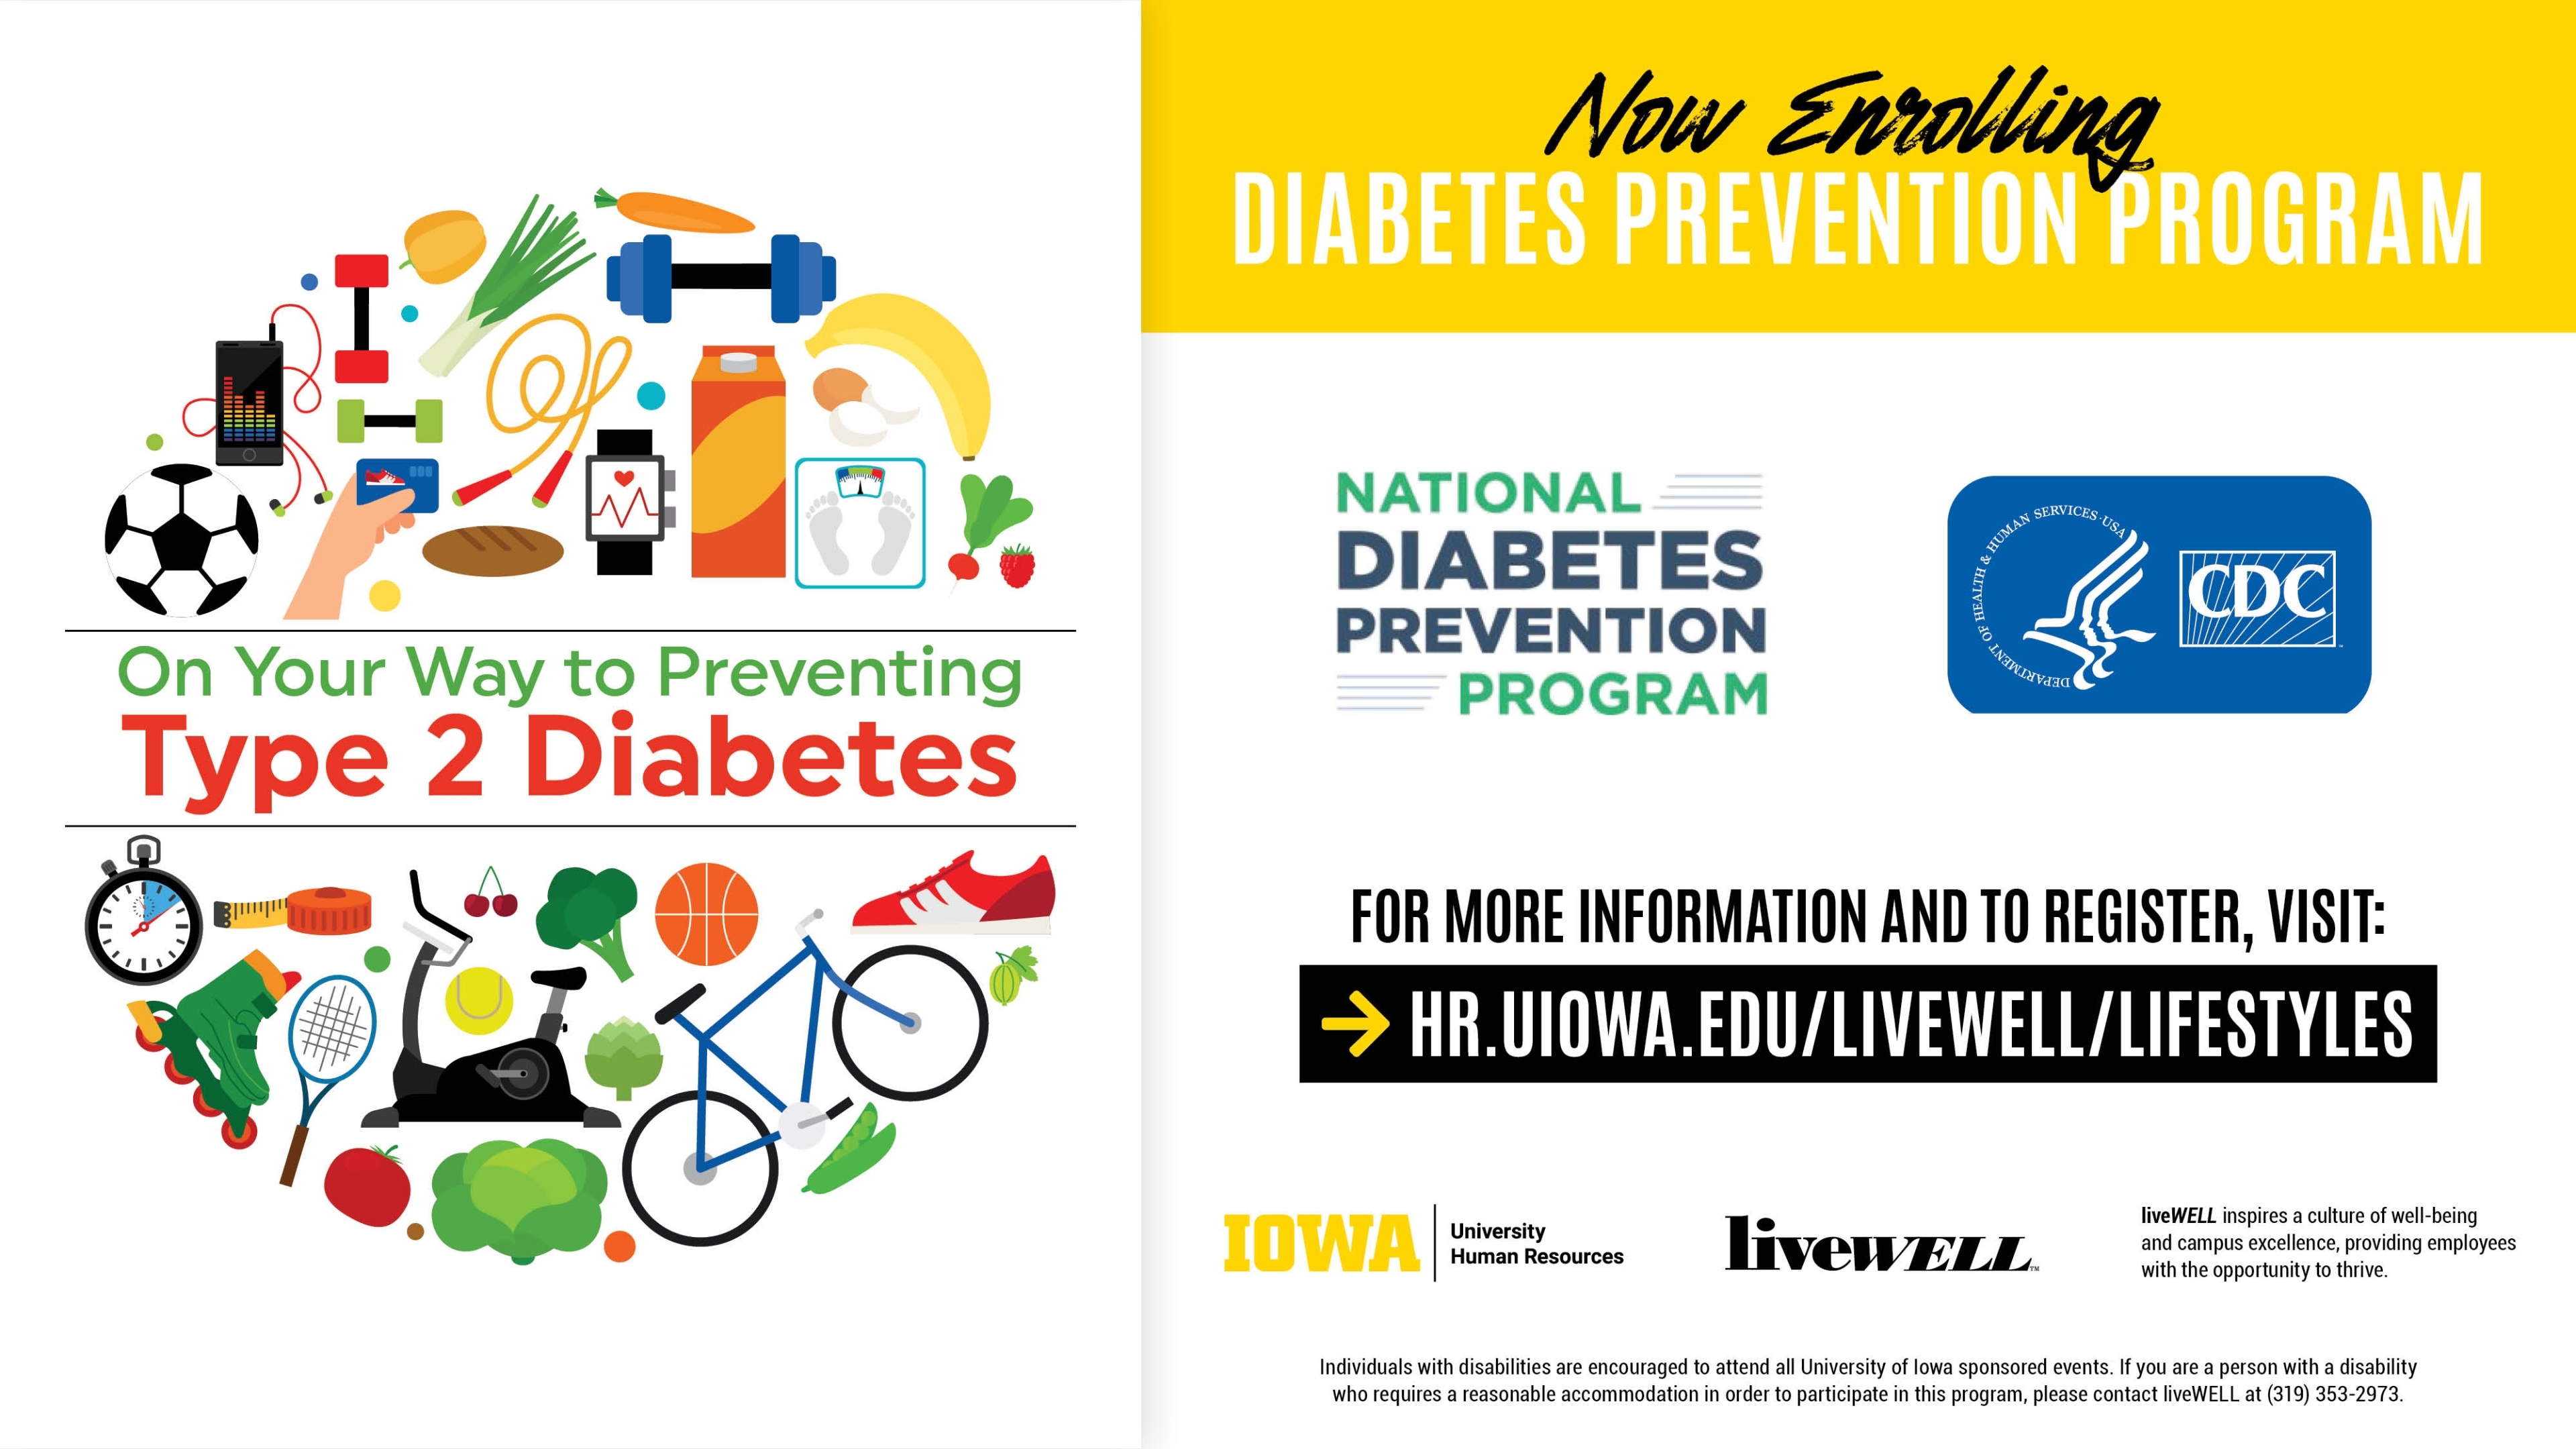 Now Enrolling Diabetes Prevention Program National Diabetes Prevention Program CDC For more information and to register, visit: hr.uiowa.edu/livewell/lifestyles